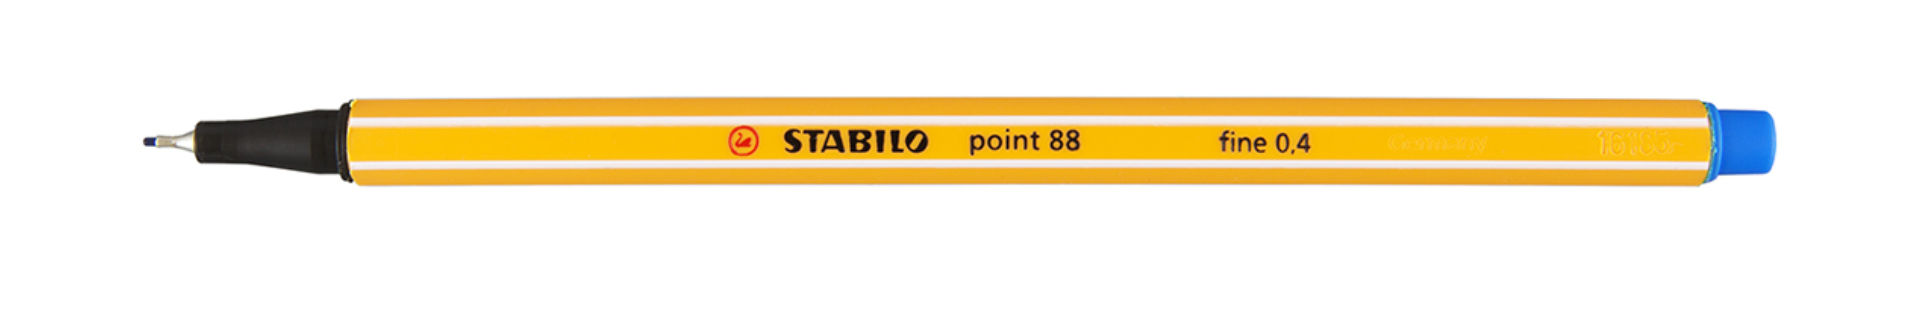 Stabilo Point 88